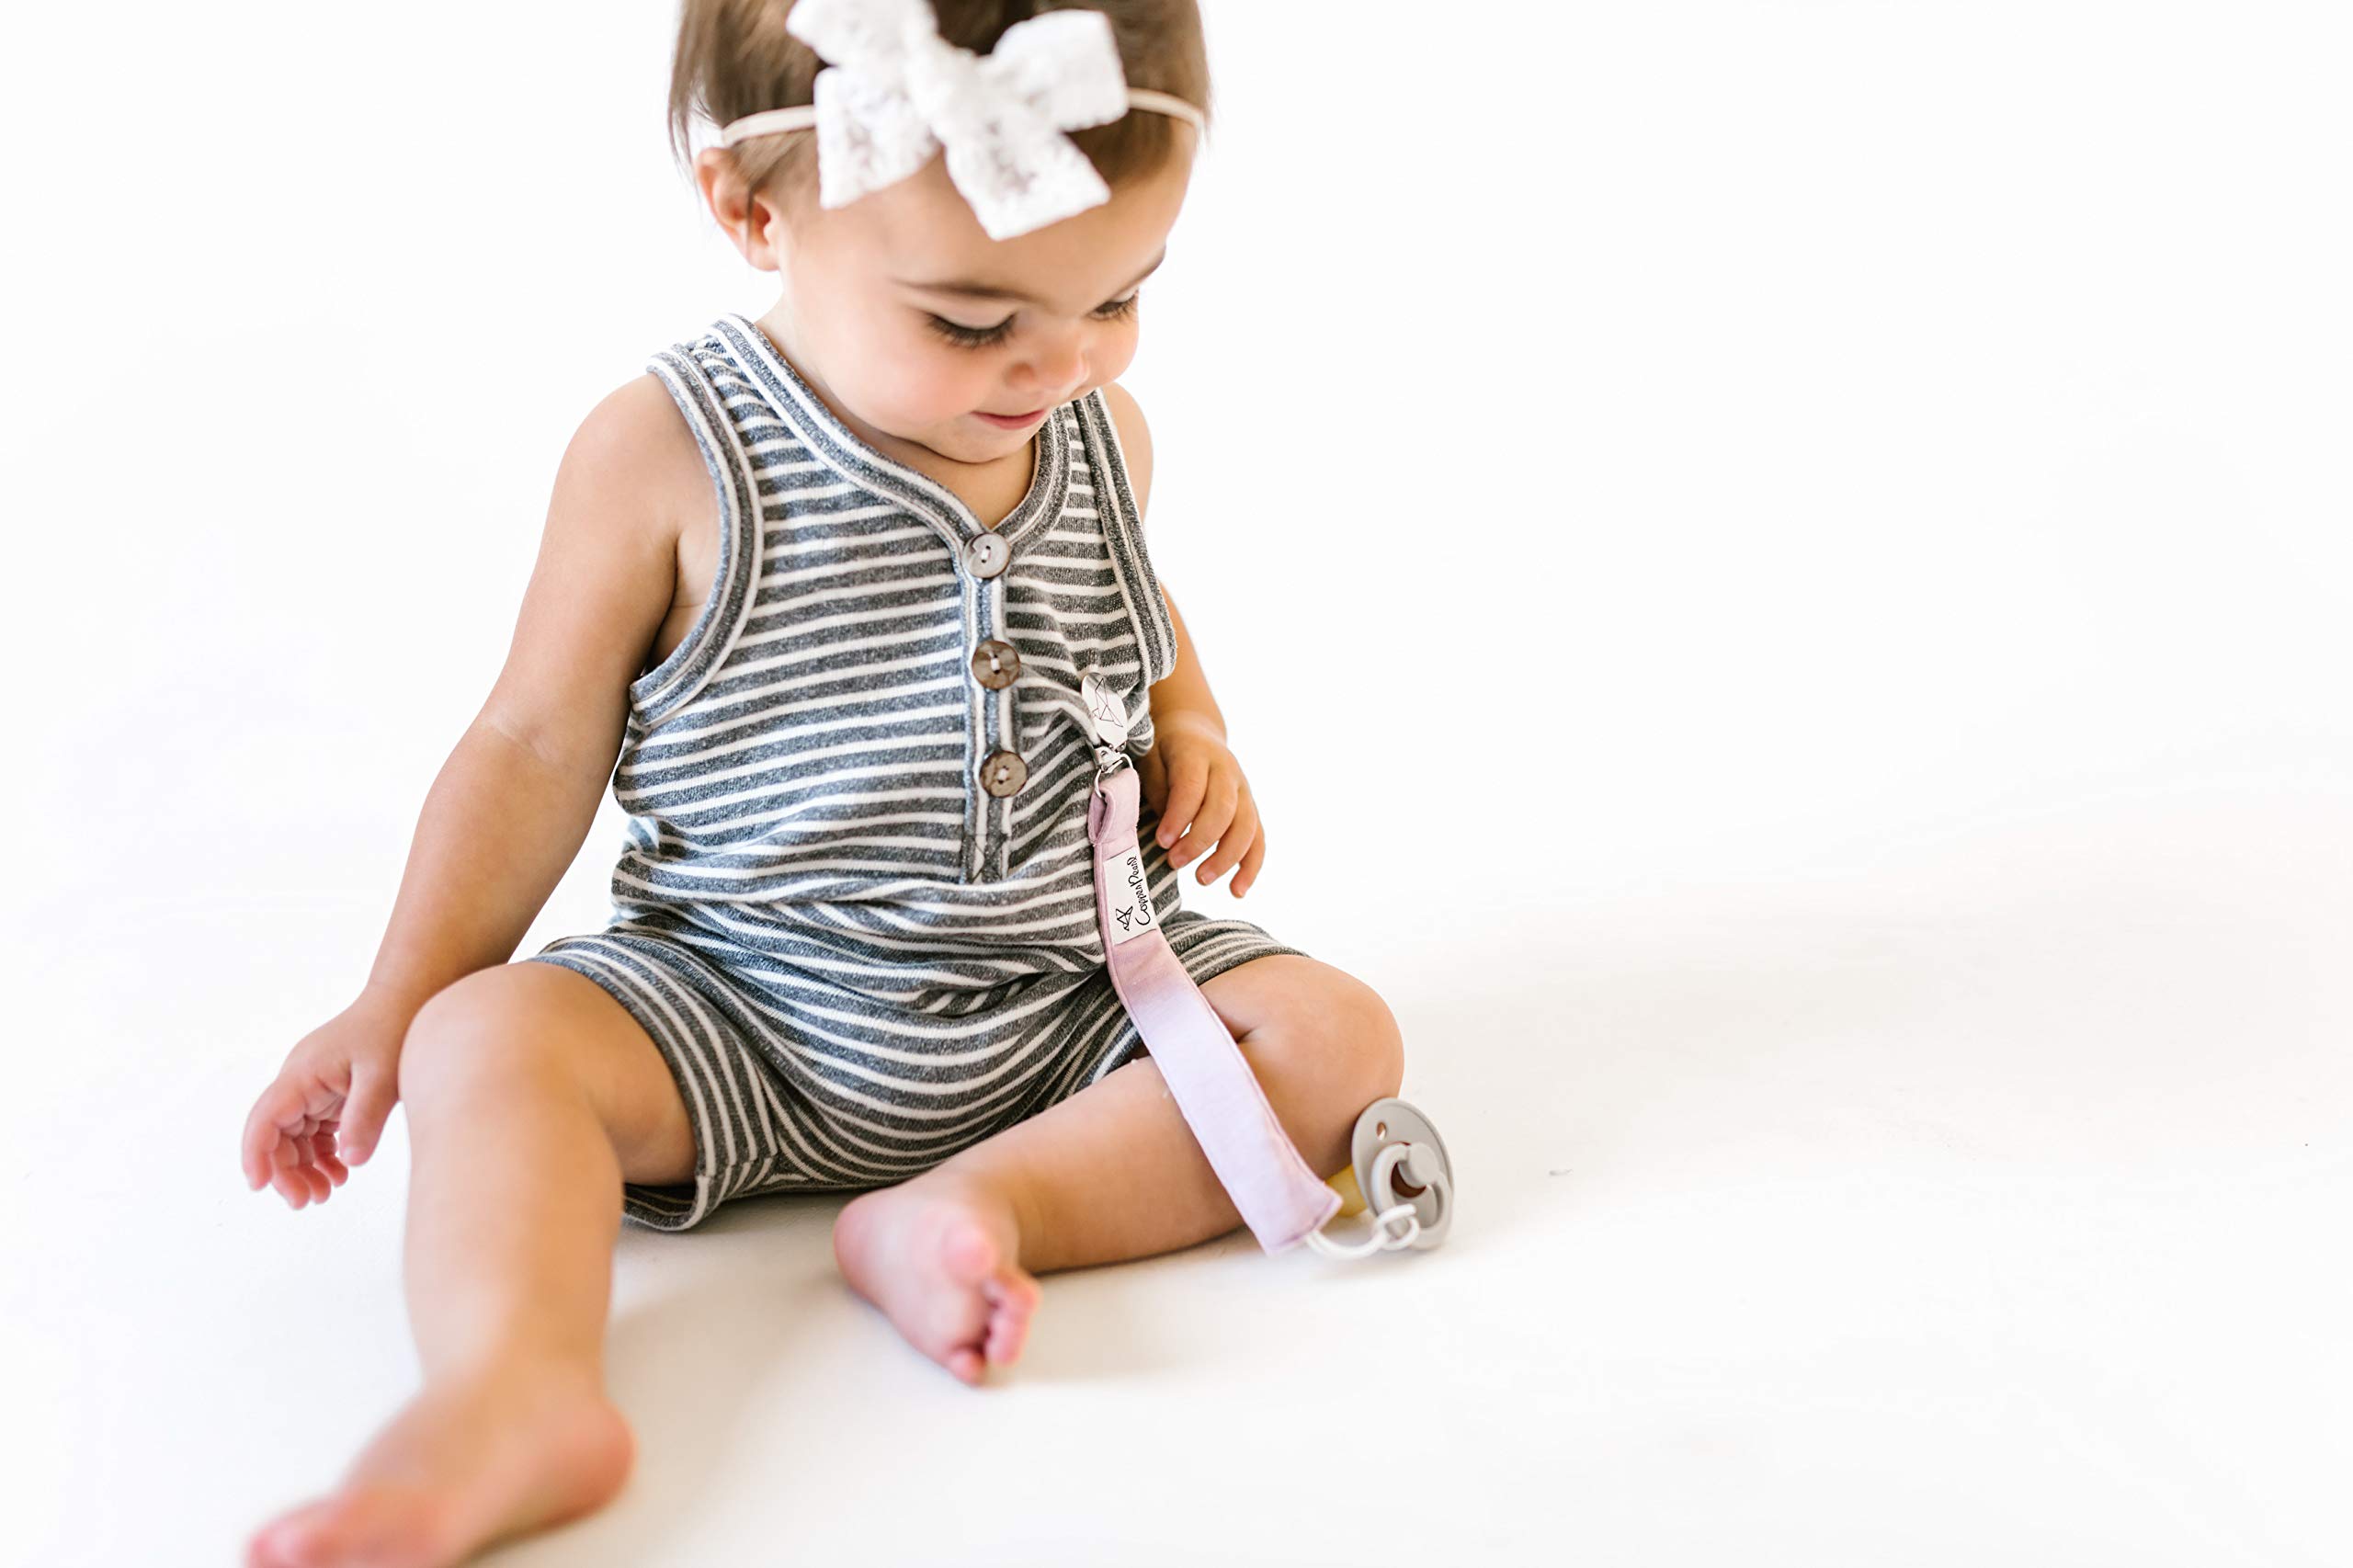 Copper Pearl Essentials Bundle | Baby Burp Cloth Large 21